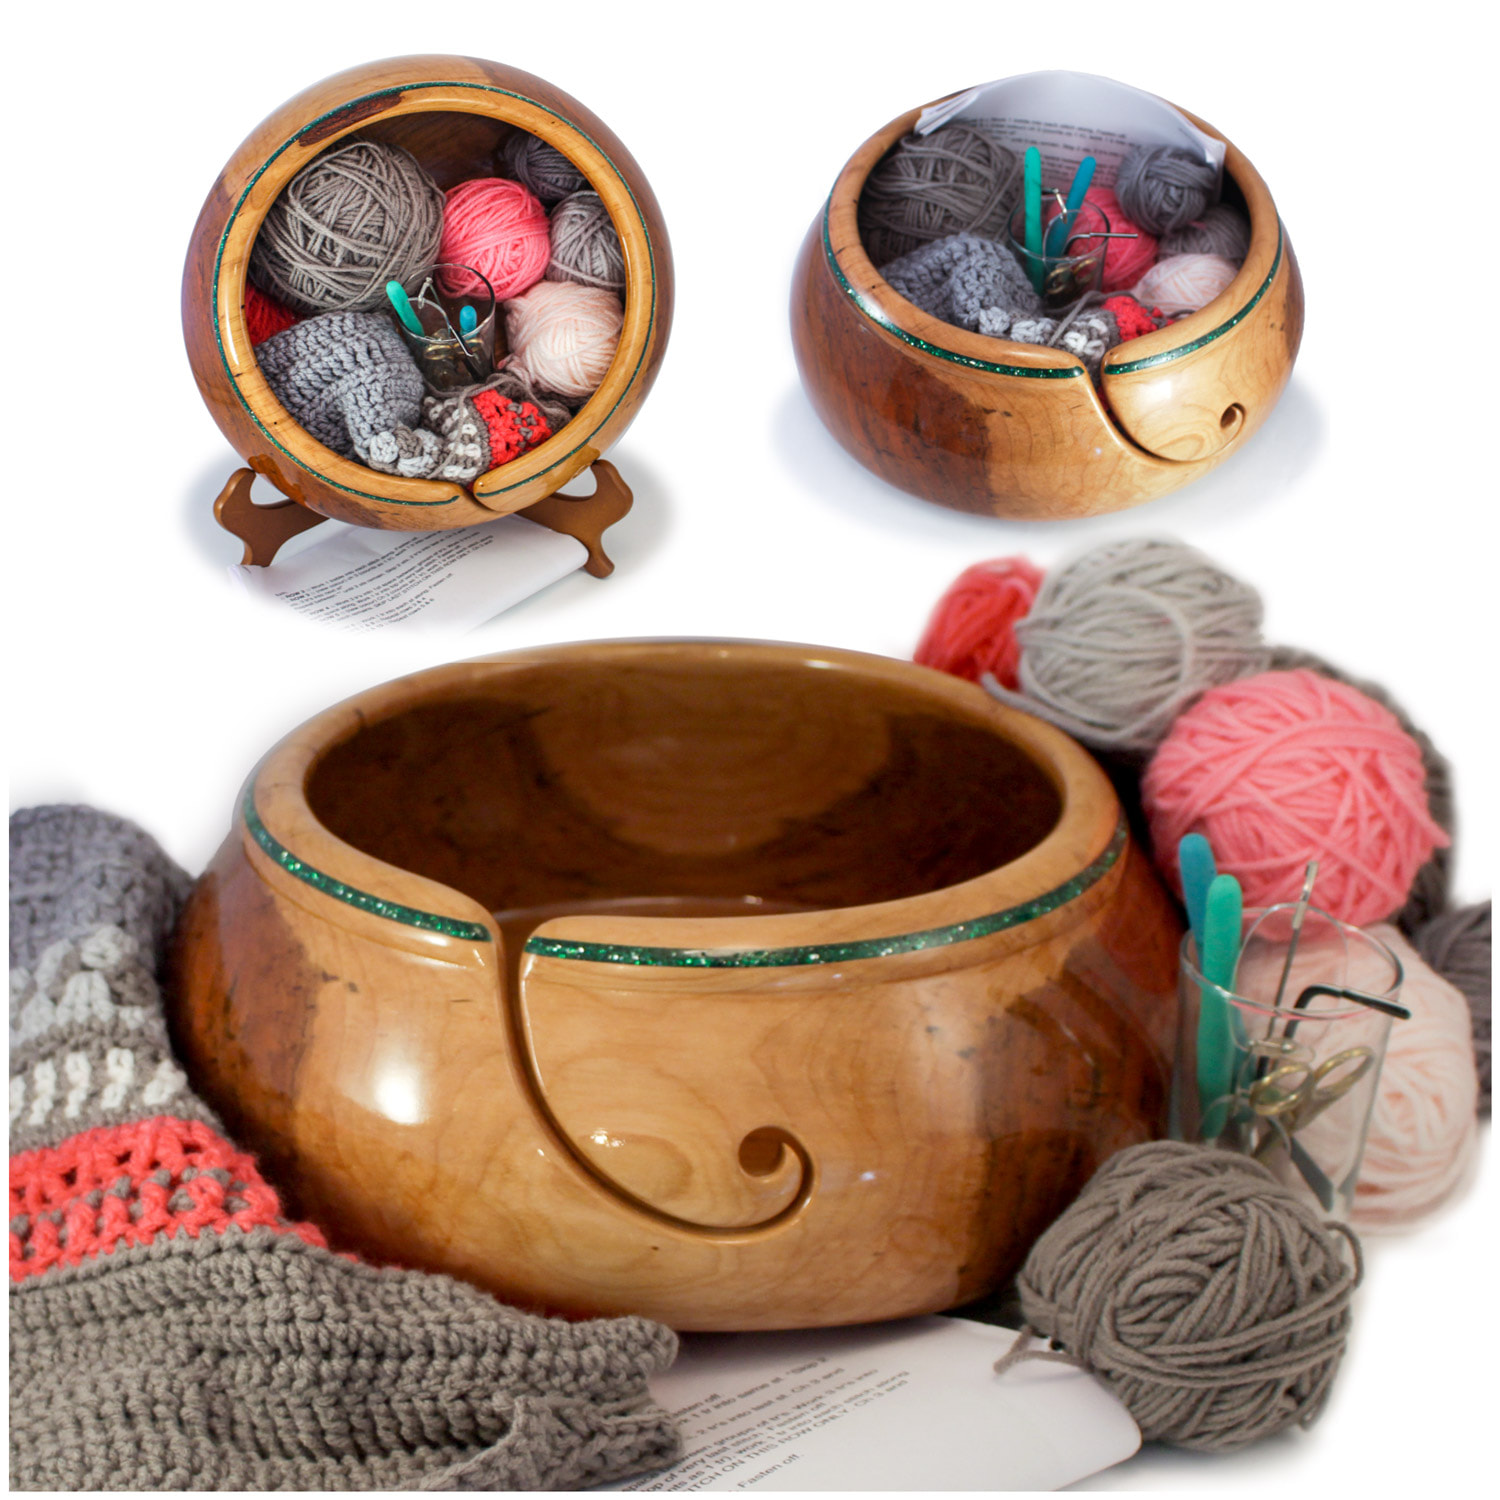 XXXL Yarn Bowl, Pretty, HUGE! For Knitting, Crochet, Yarning